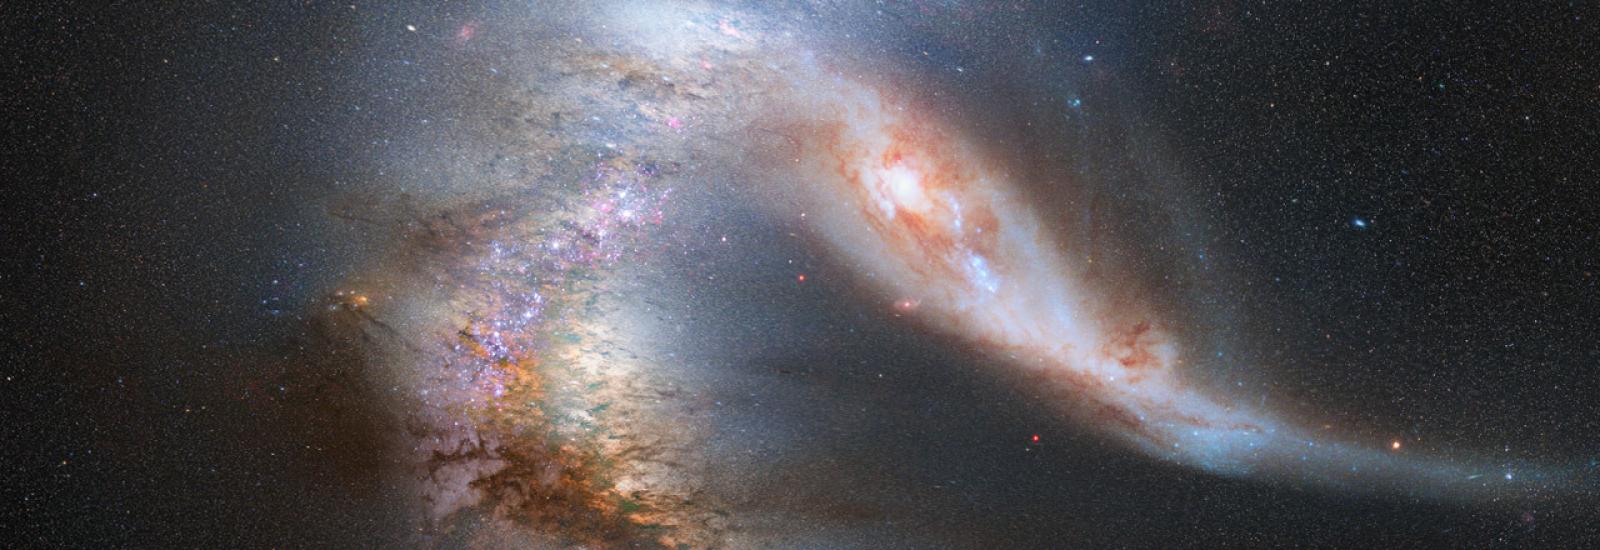 STScI-Future Galaxy Merger